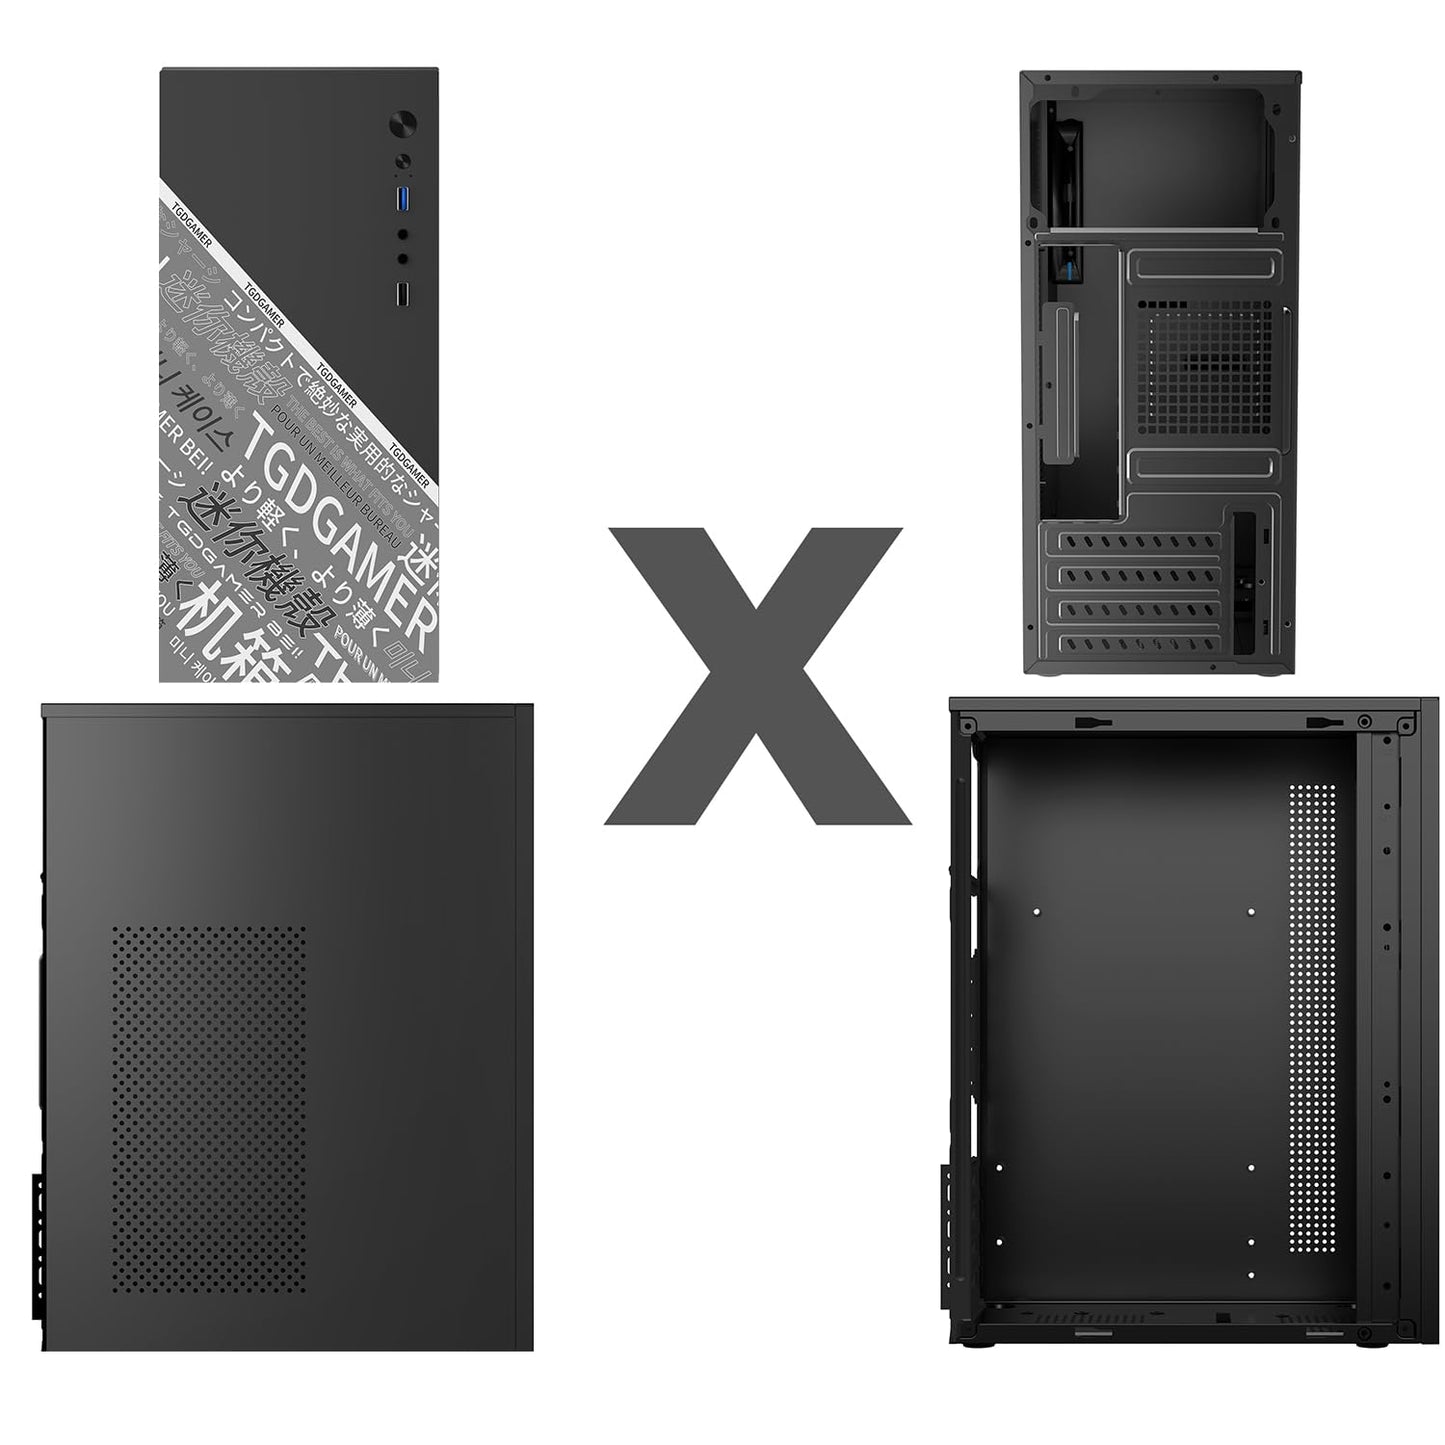 TGD-1/matx case,itx case,Micro ATX PC Case for Office, Support MATX, Mini-ITX, Micro ATX case Slim with USB3.0x1, USB2.0x1I/O Port, Black Without Fans